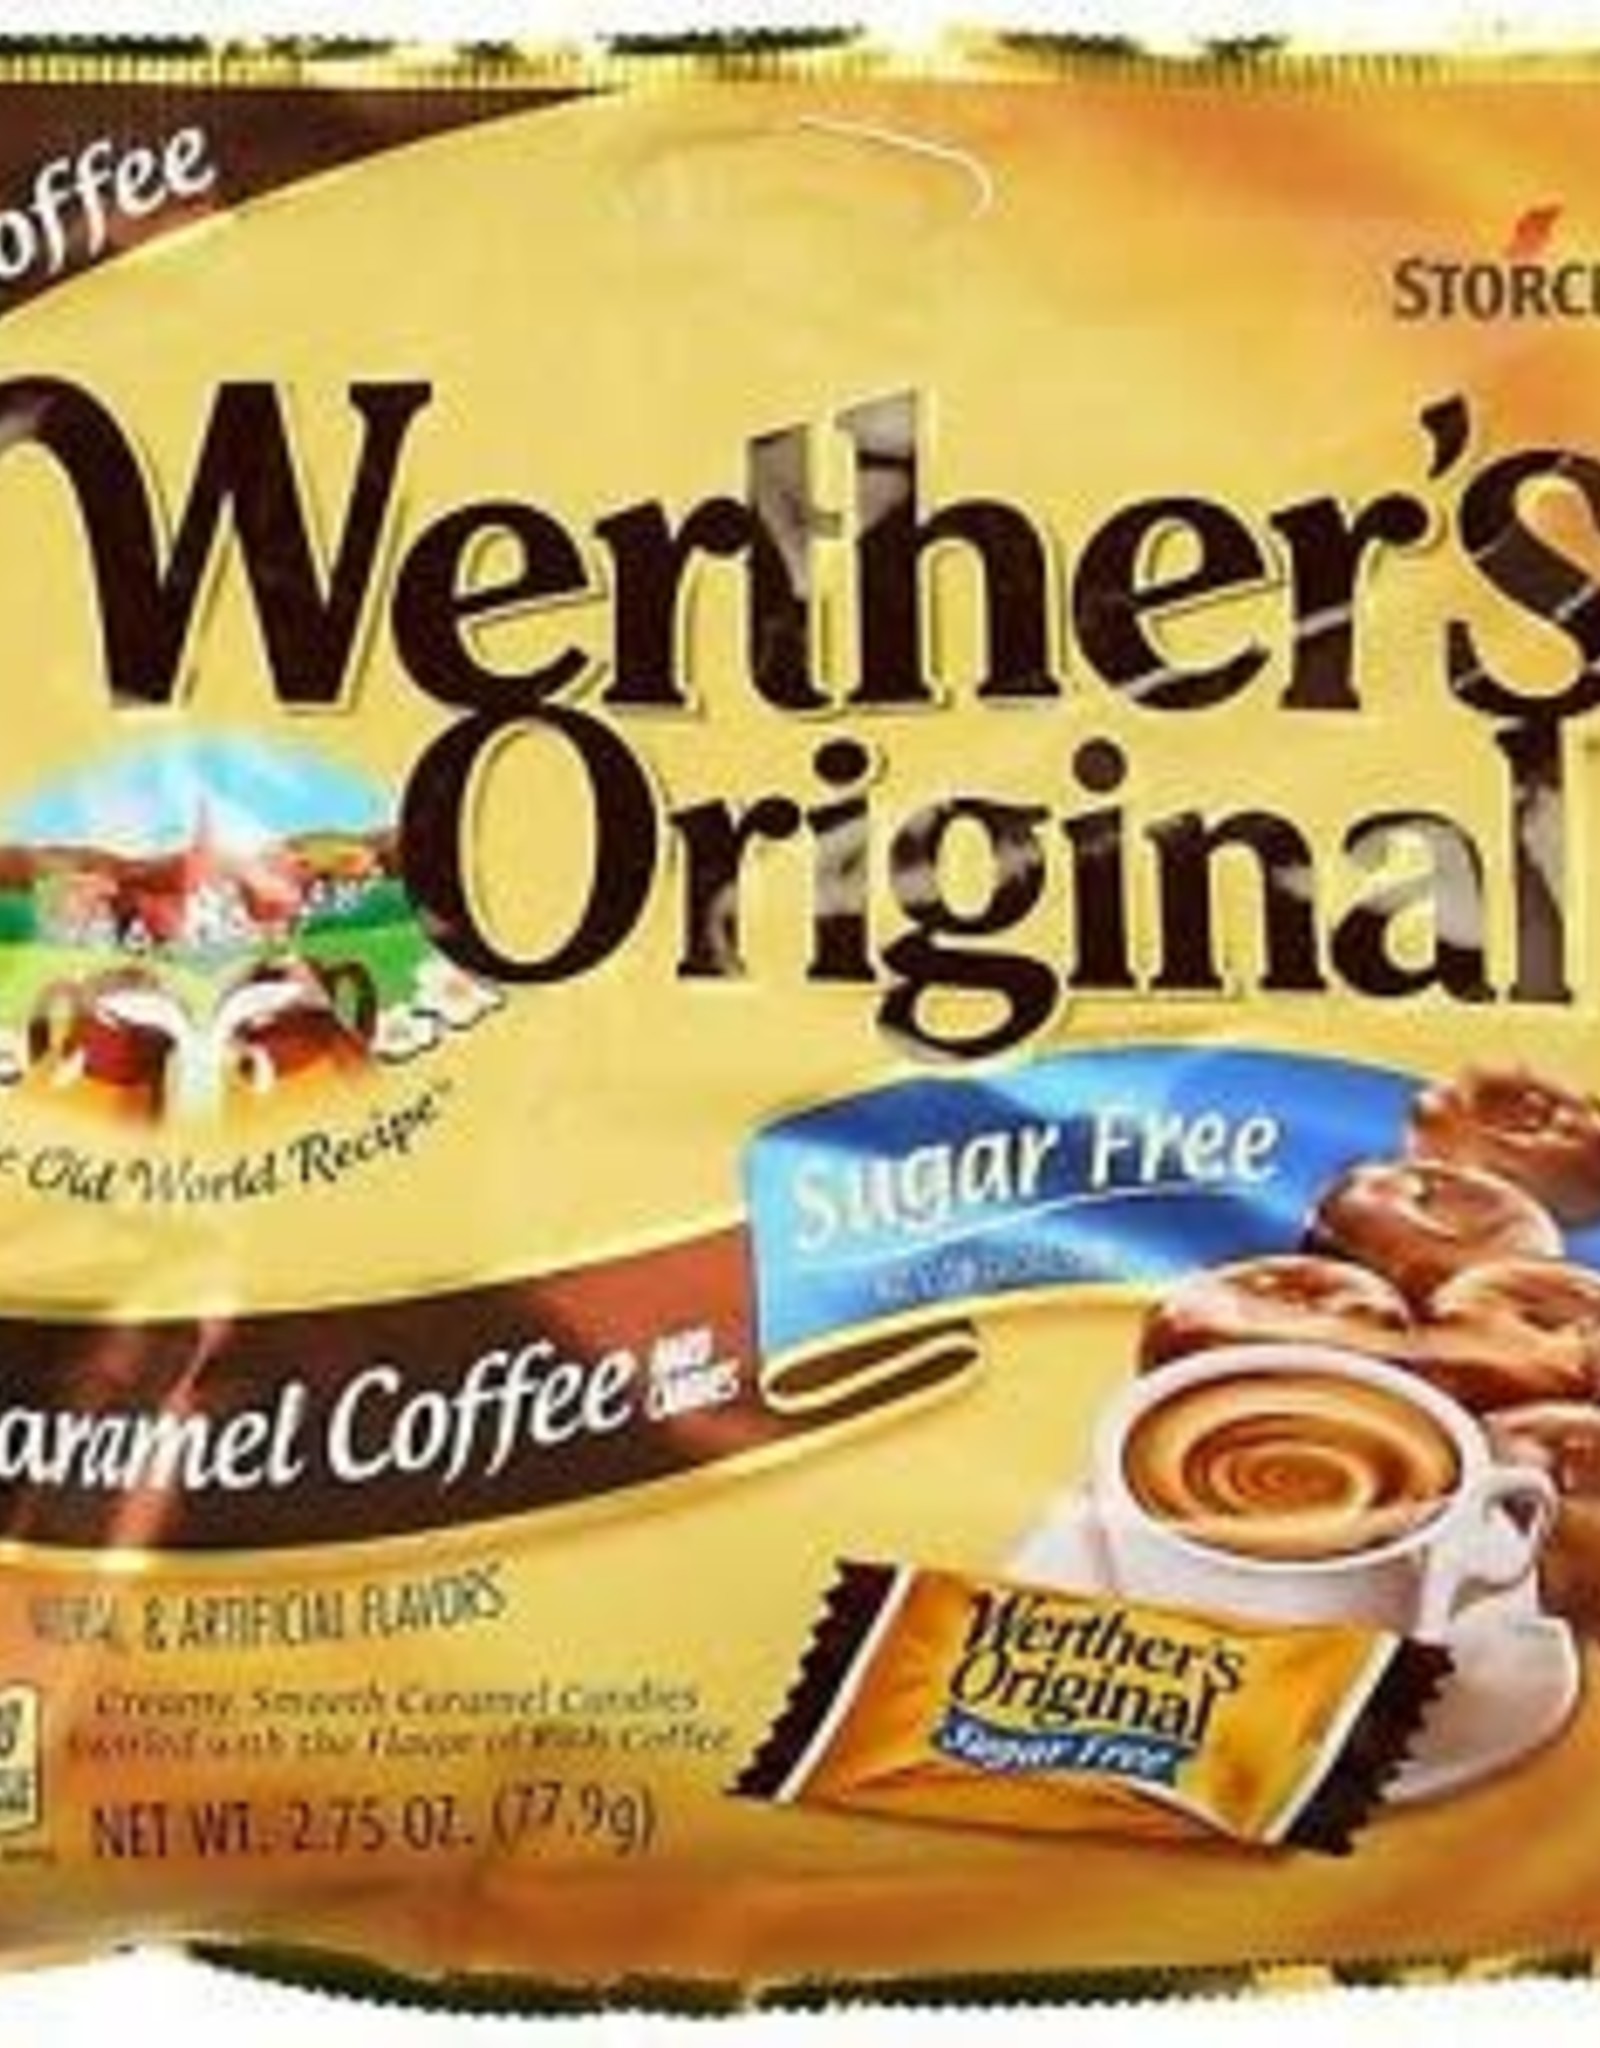 Werthers Werther's Caramel Coffee